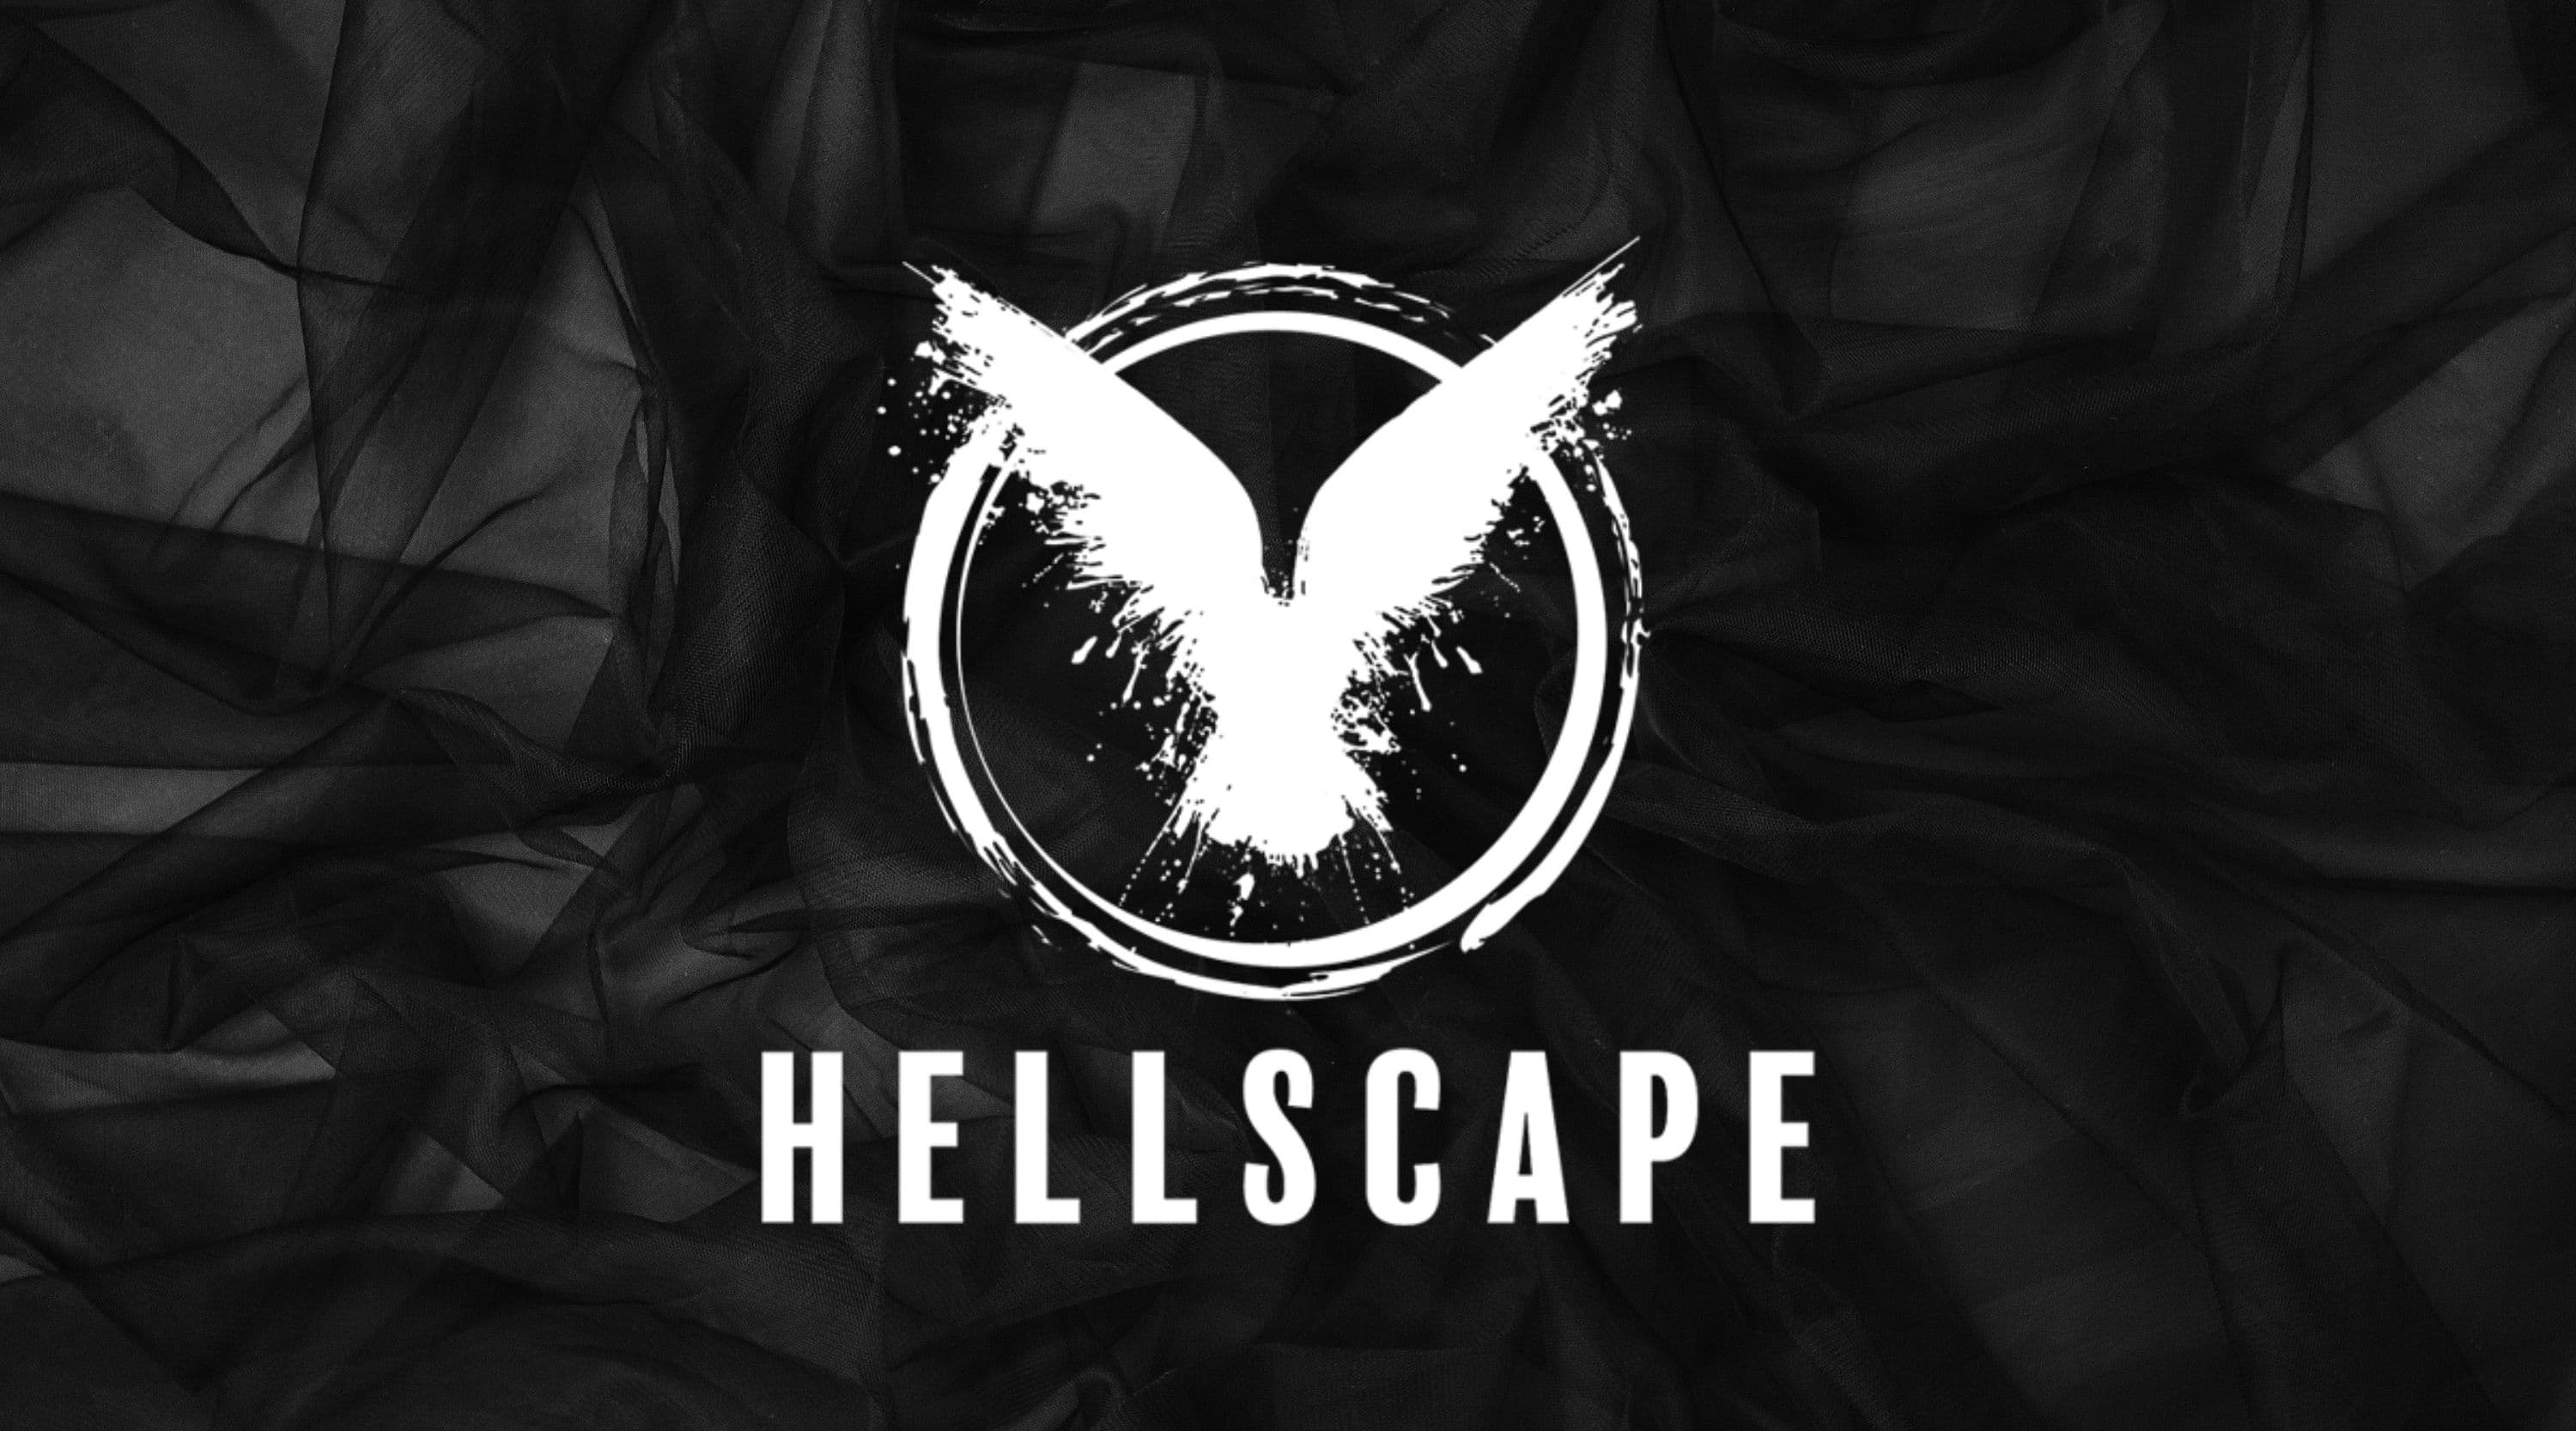 New Label Alert: Hellscape